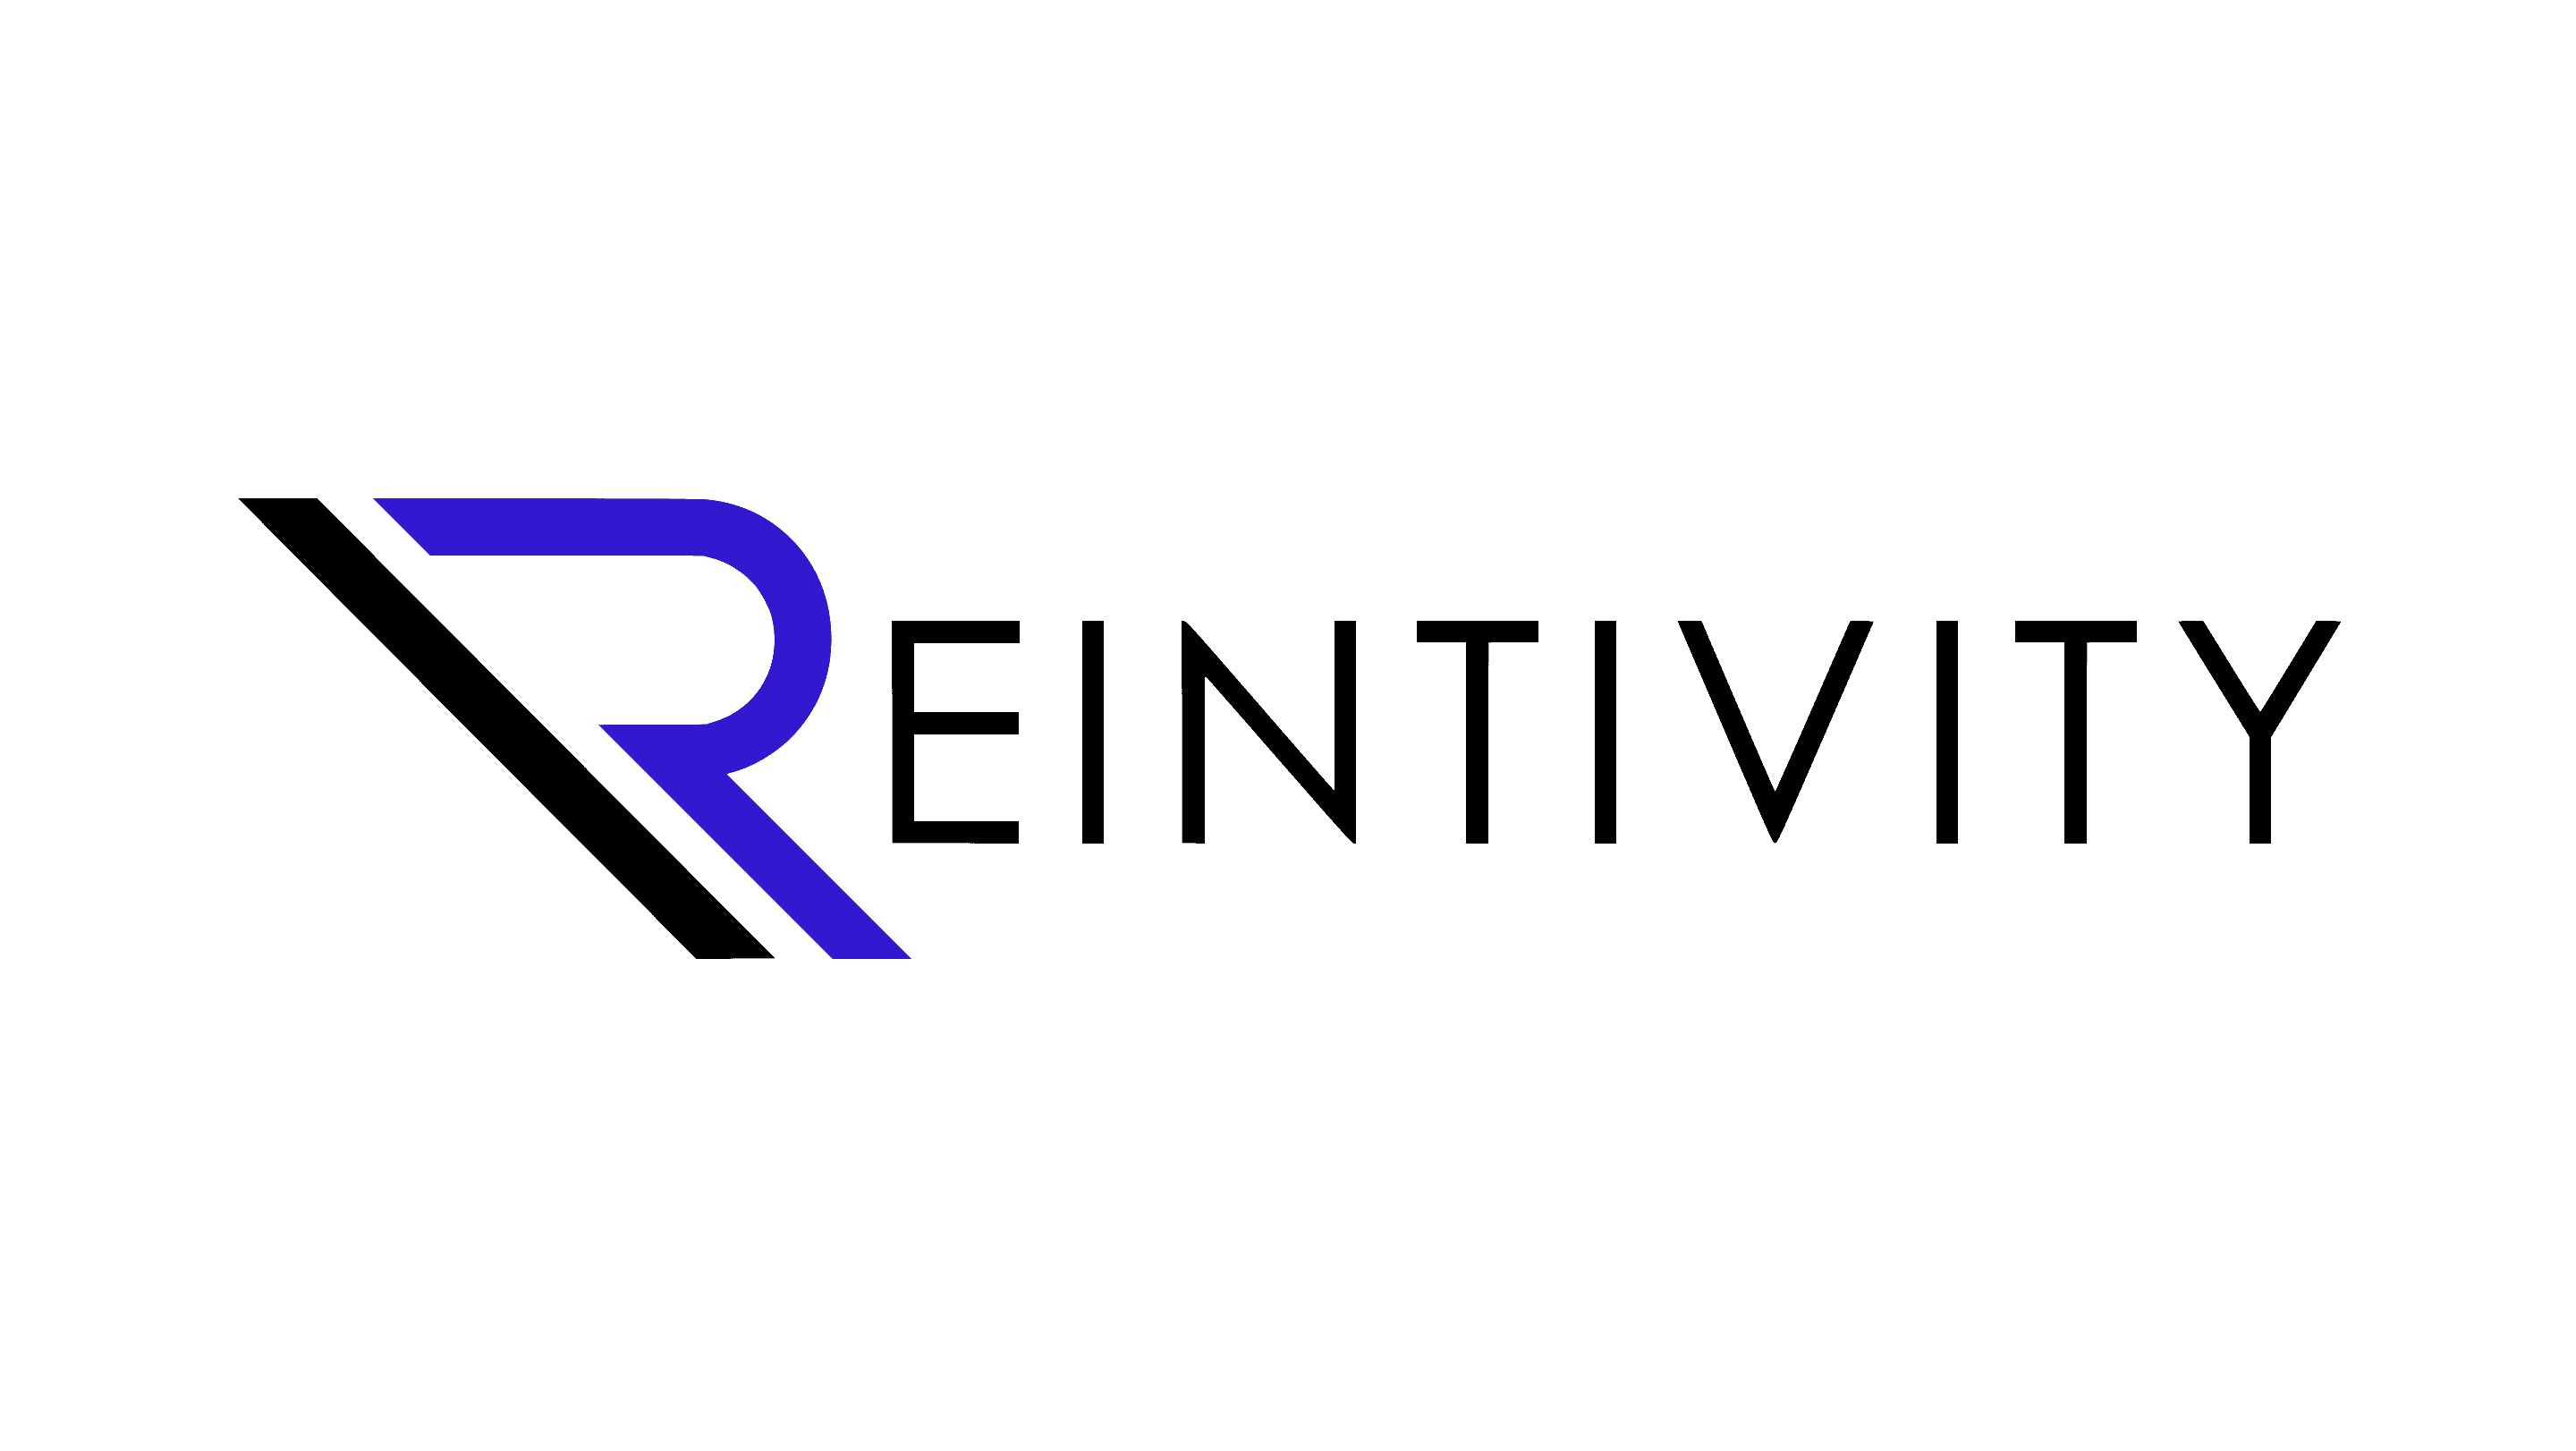 Reintivity Solutions